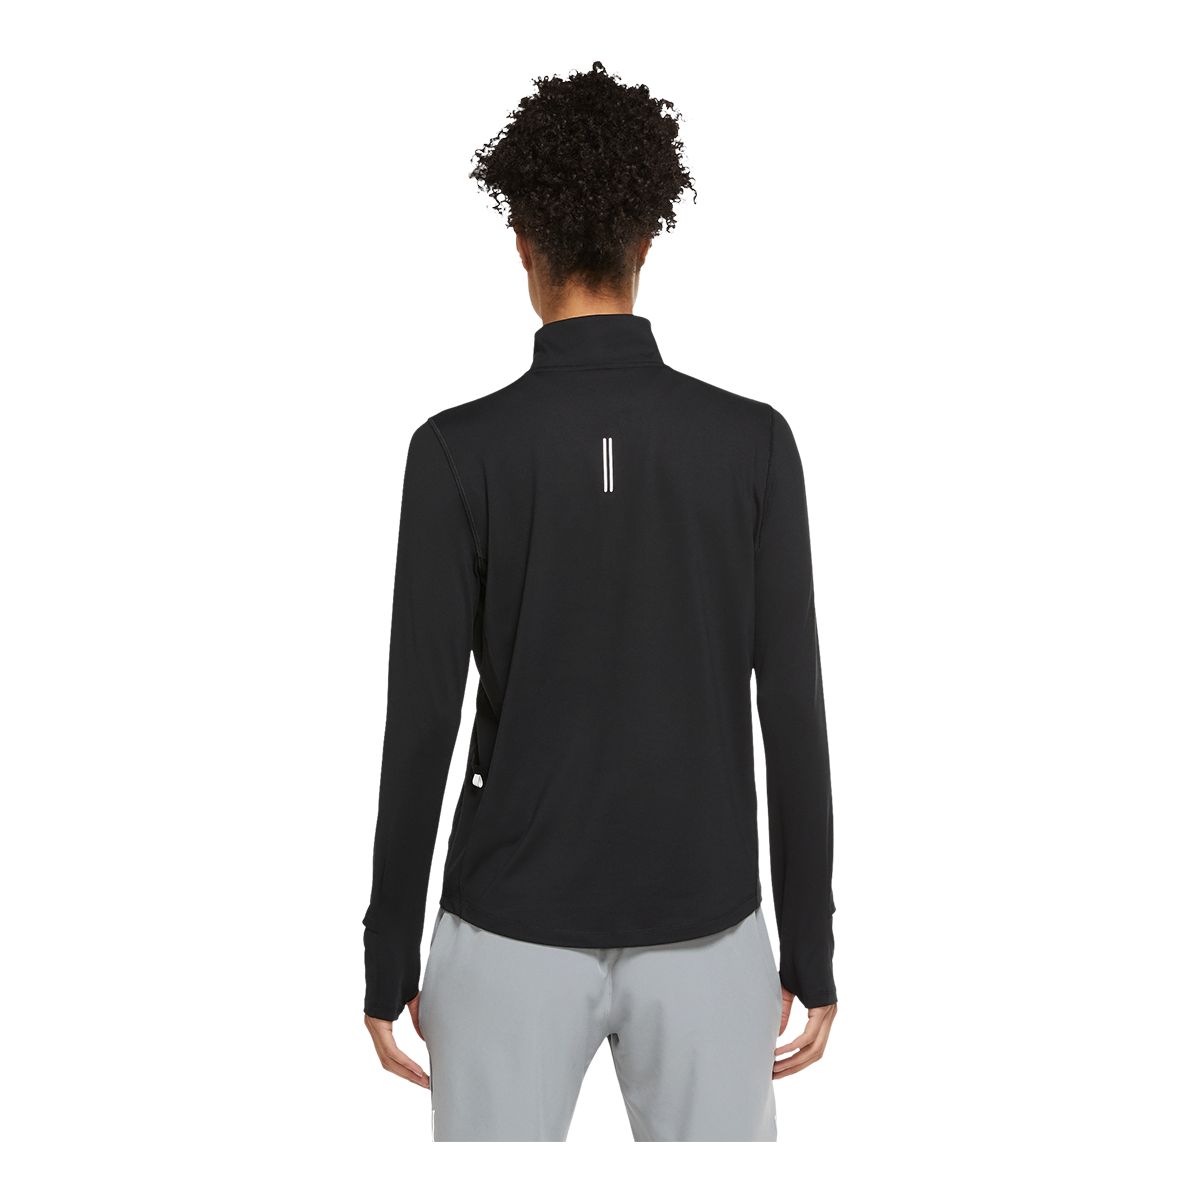 Nike Women's Run Element 1/2 Zip Long Sleeve Top